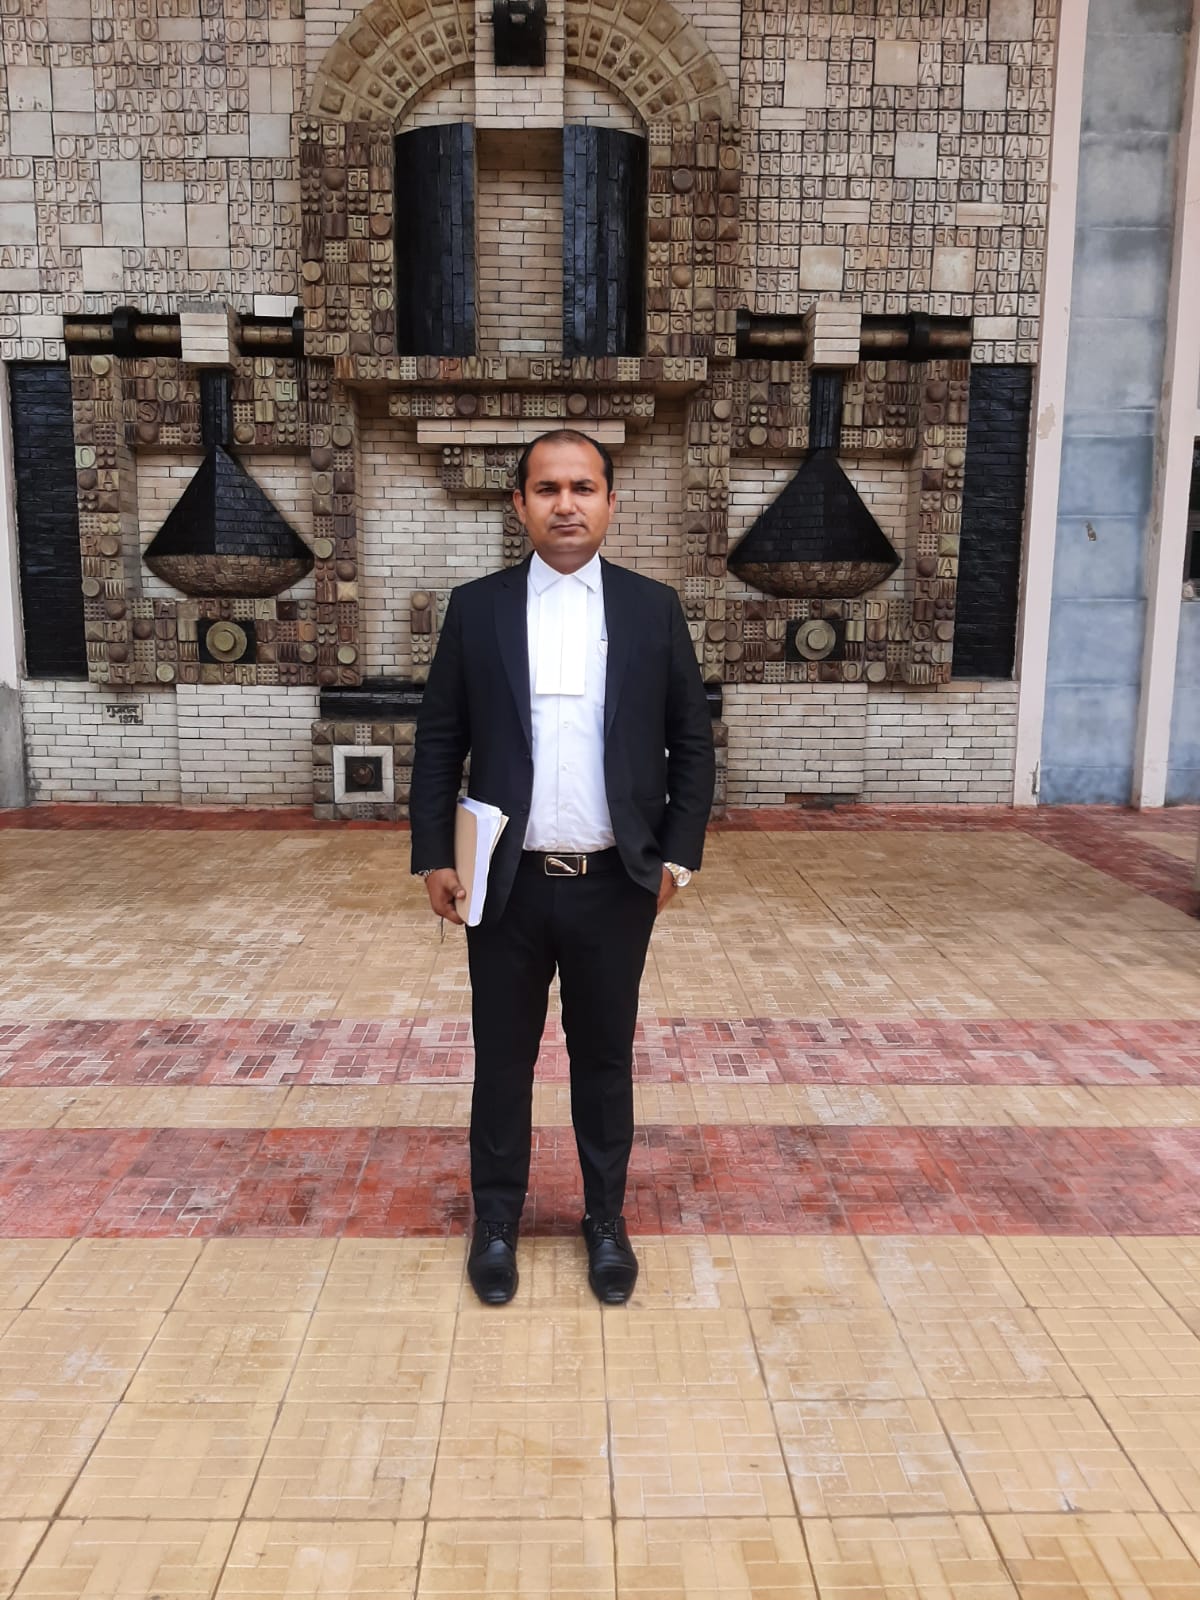 Jitendar Singh Advocate, JPV LAW Associates|Architect|Professional Services